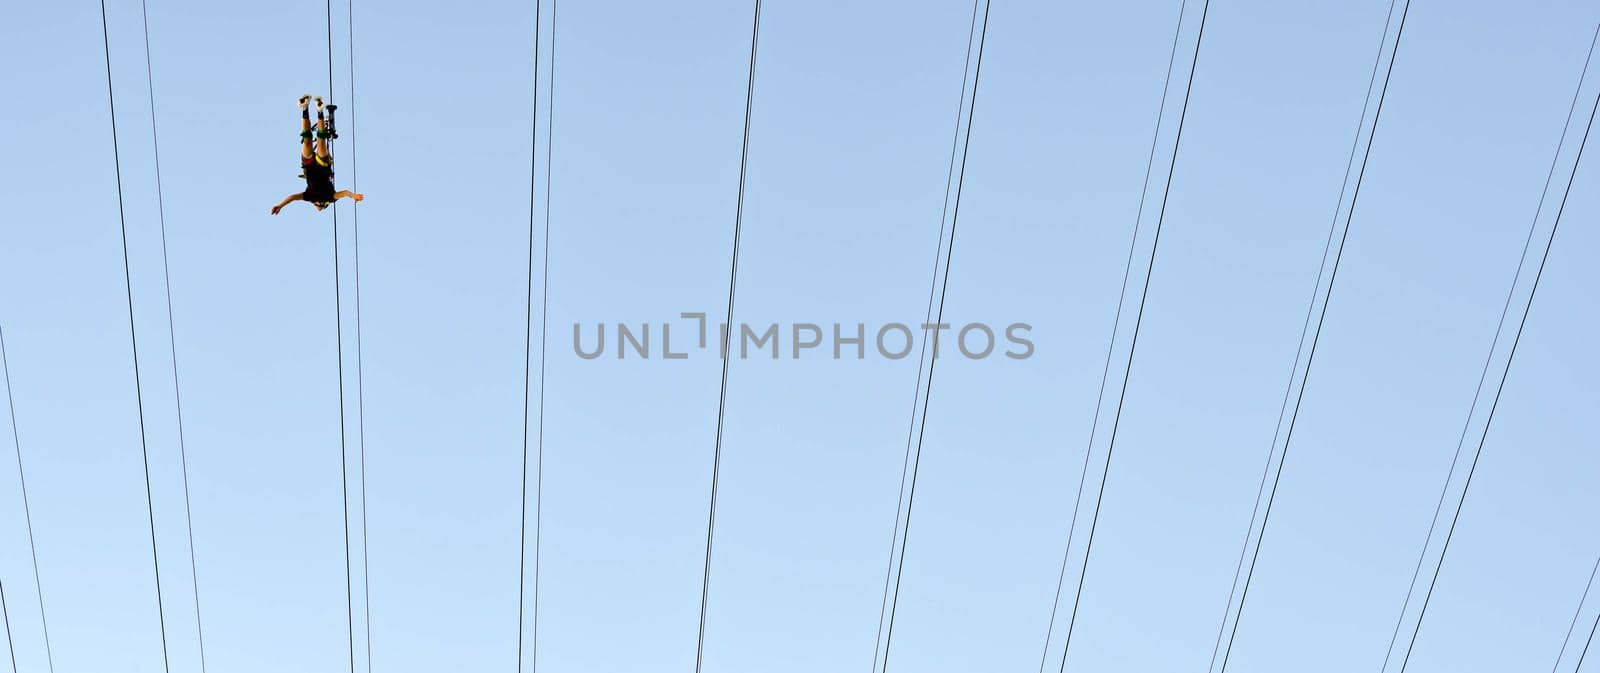 Tourist enjoying the FlyLinq Zipline at Las Vegas Strip, Las Vegas Nevada USA, March 30, 2020 by billroque